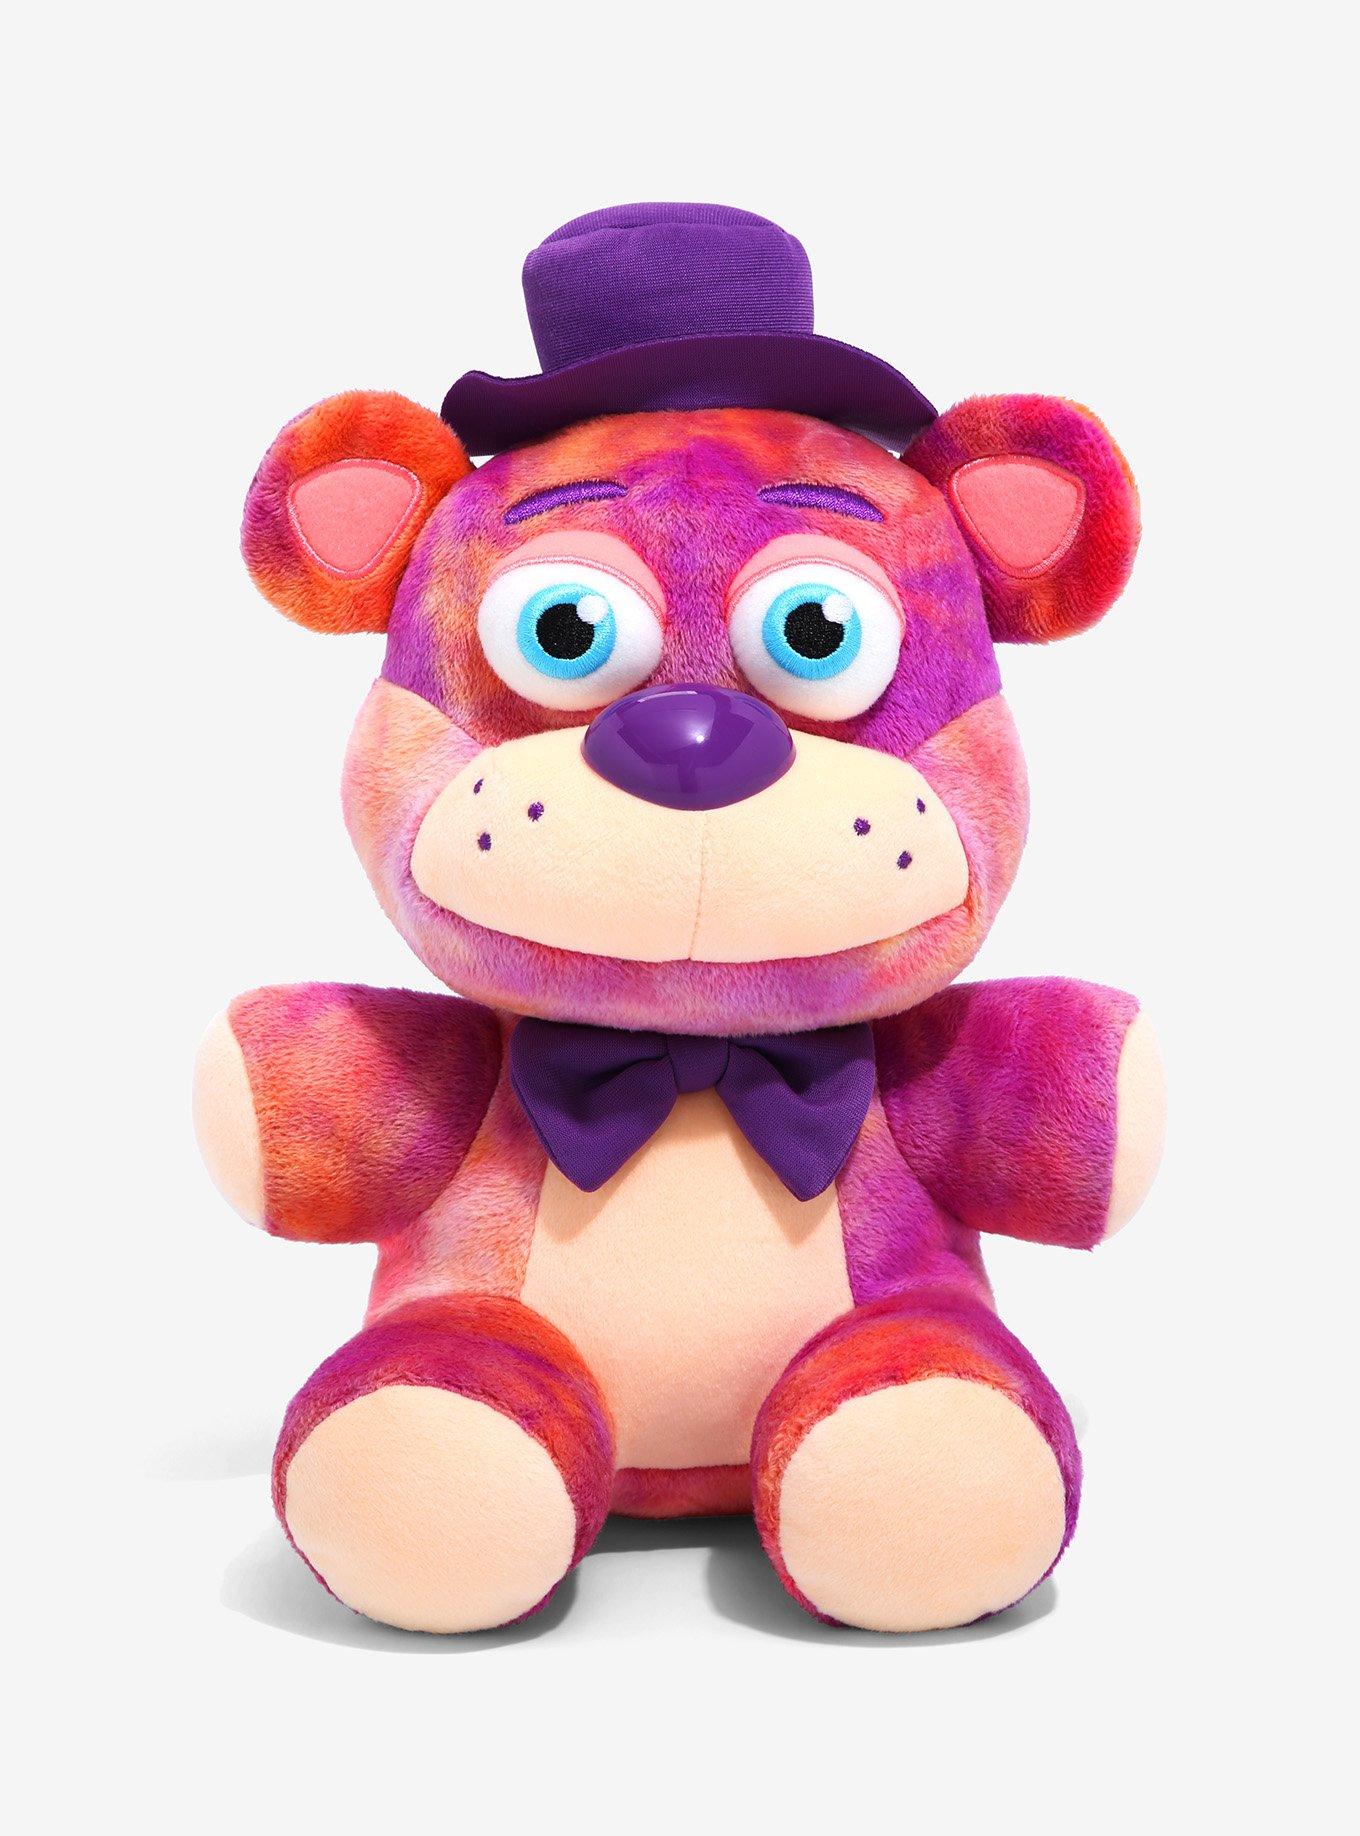 Funko Plush: Five Nights at Freddy's (FNAF) Tiedye - Springtrap - Soft Toy  - Birthday Gift Idea - Of…See more Funko Plush: Five Nights at Freddy's